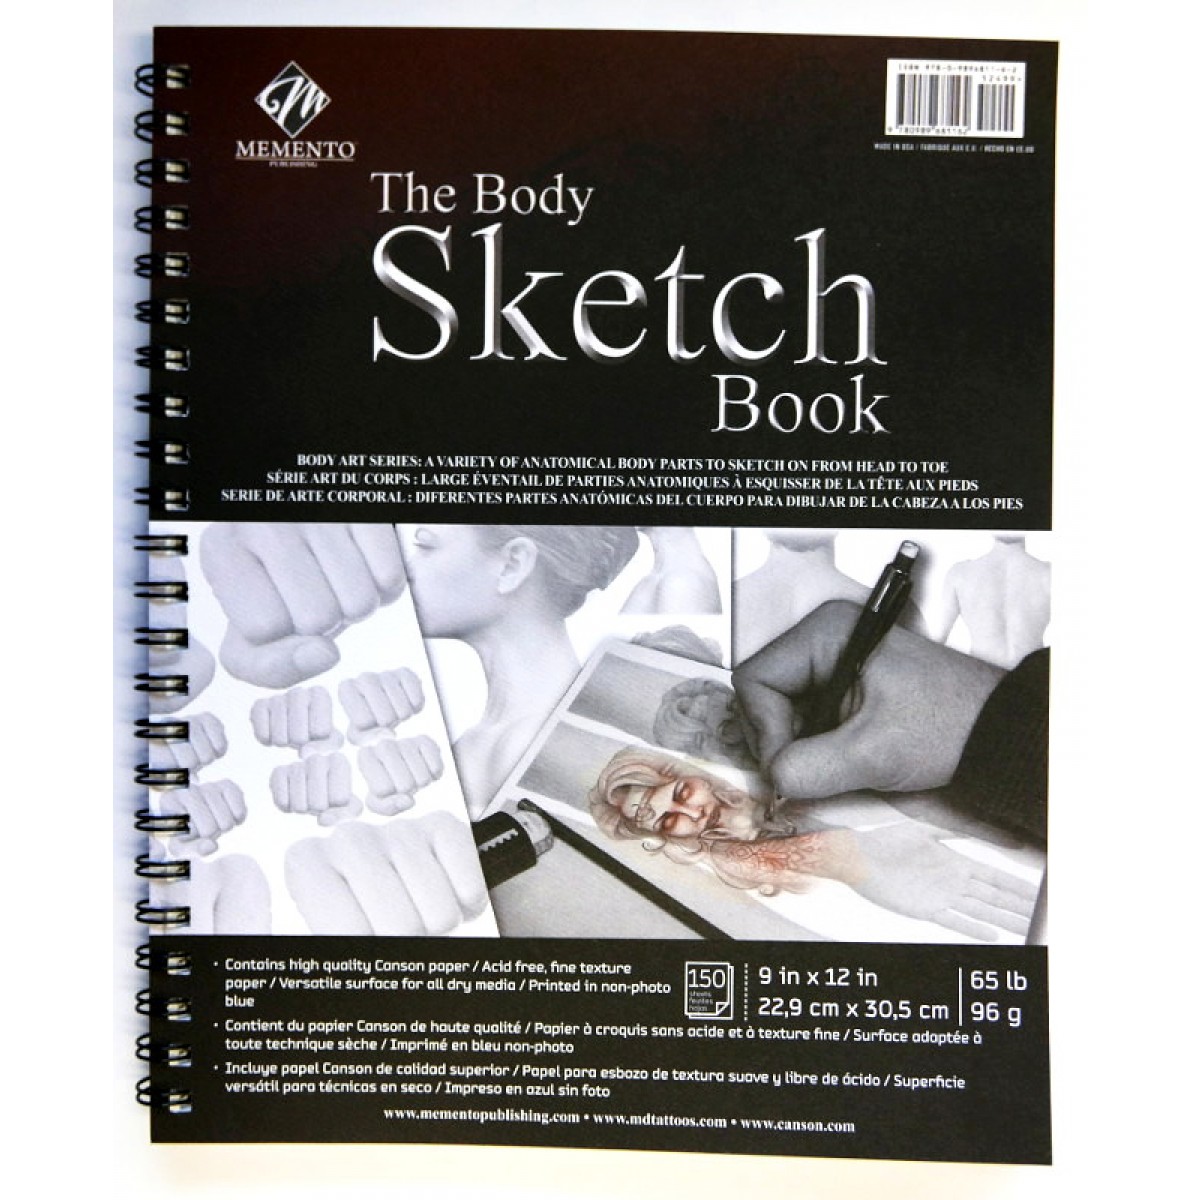 http://tattoobook.eu/media/catalog/product/cache/1/image/1200x1200/9df78eab33525d08d6e5fb8d27136e95/s/k/sketchbook01.jpg